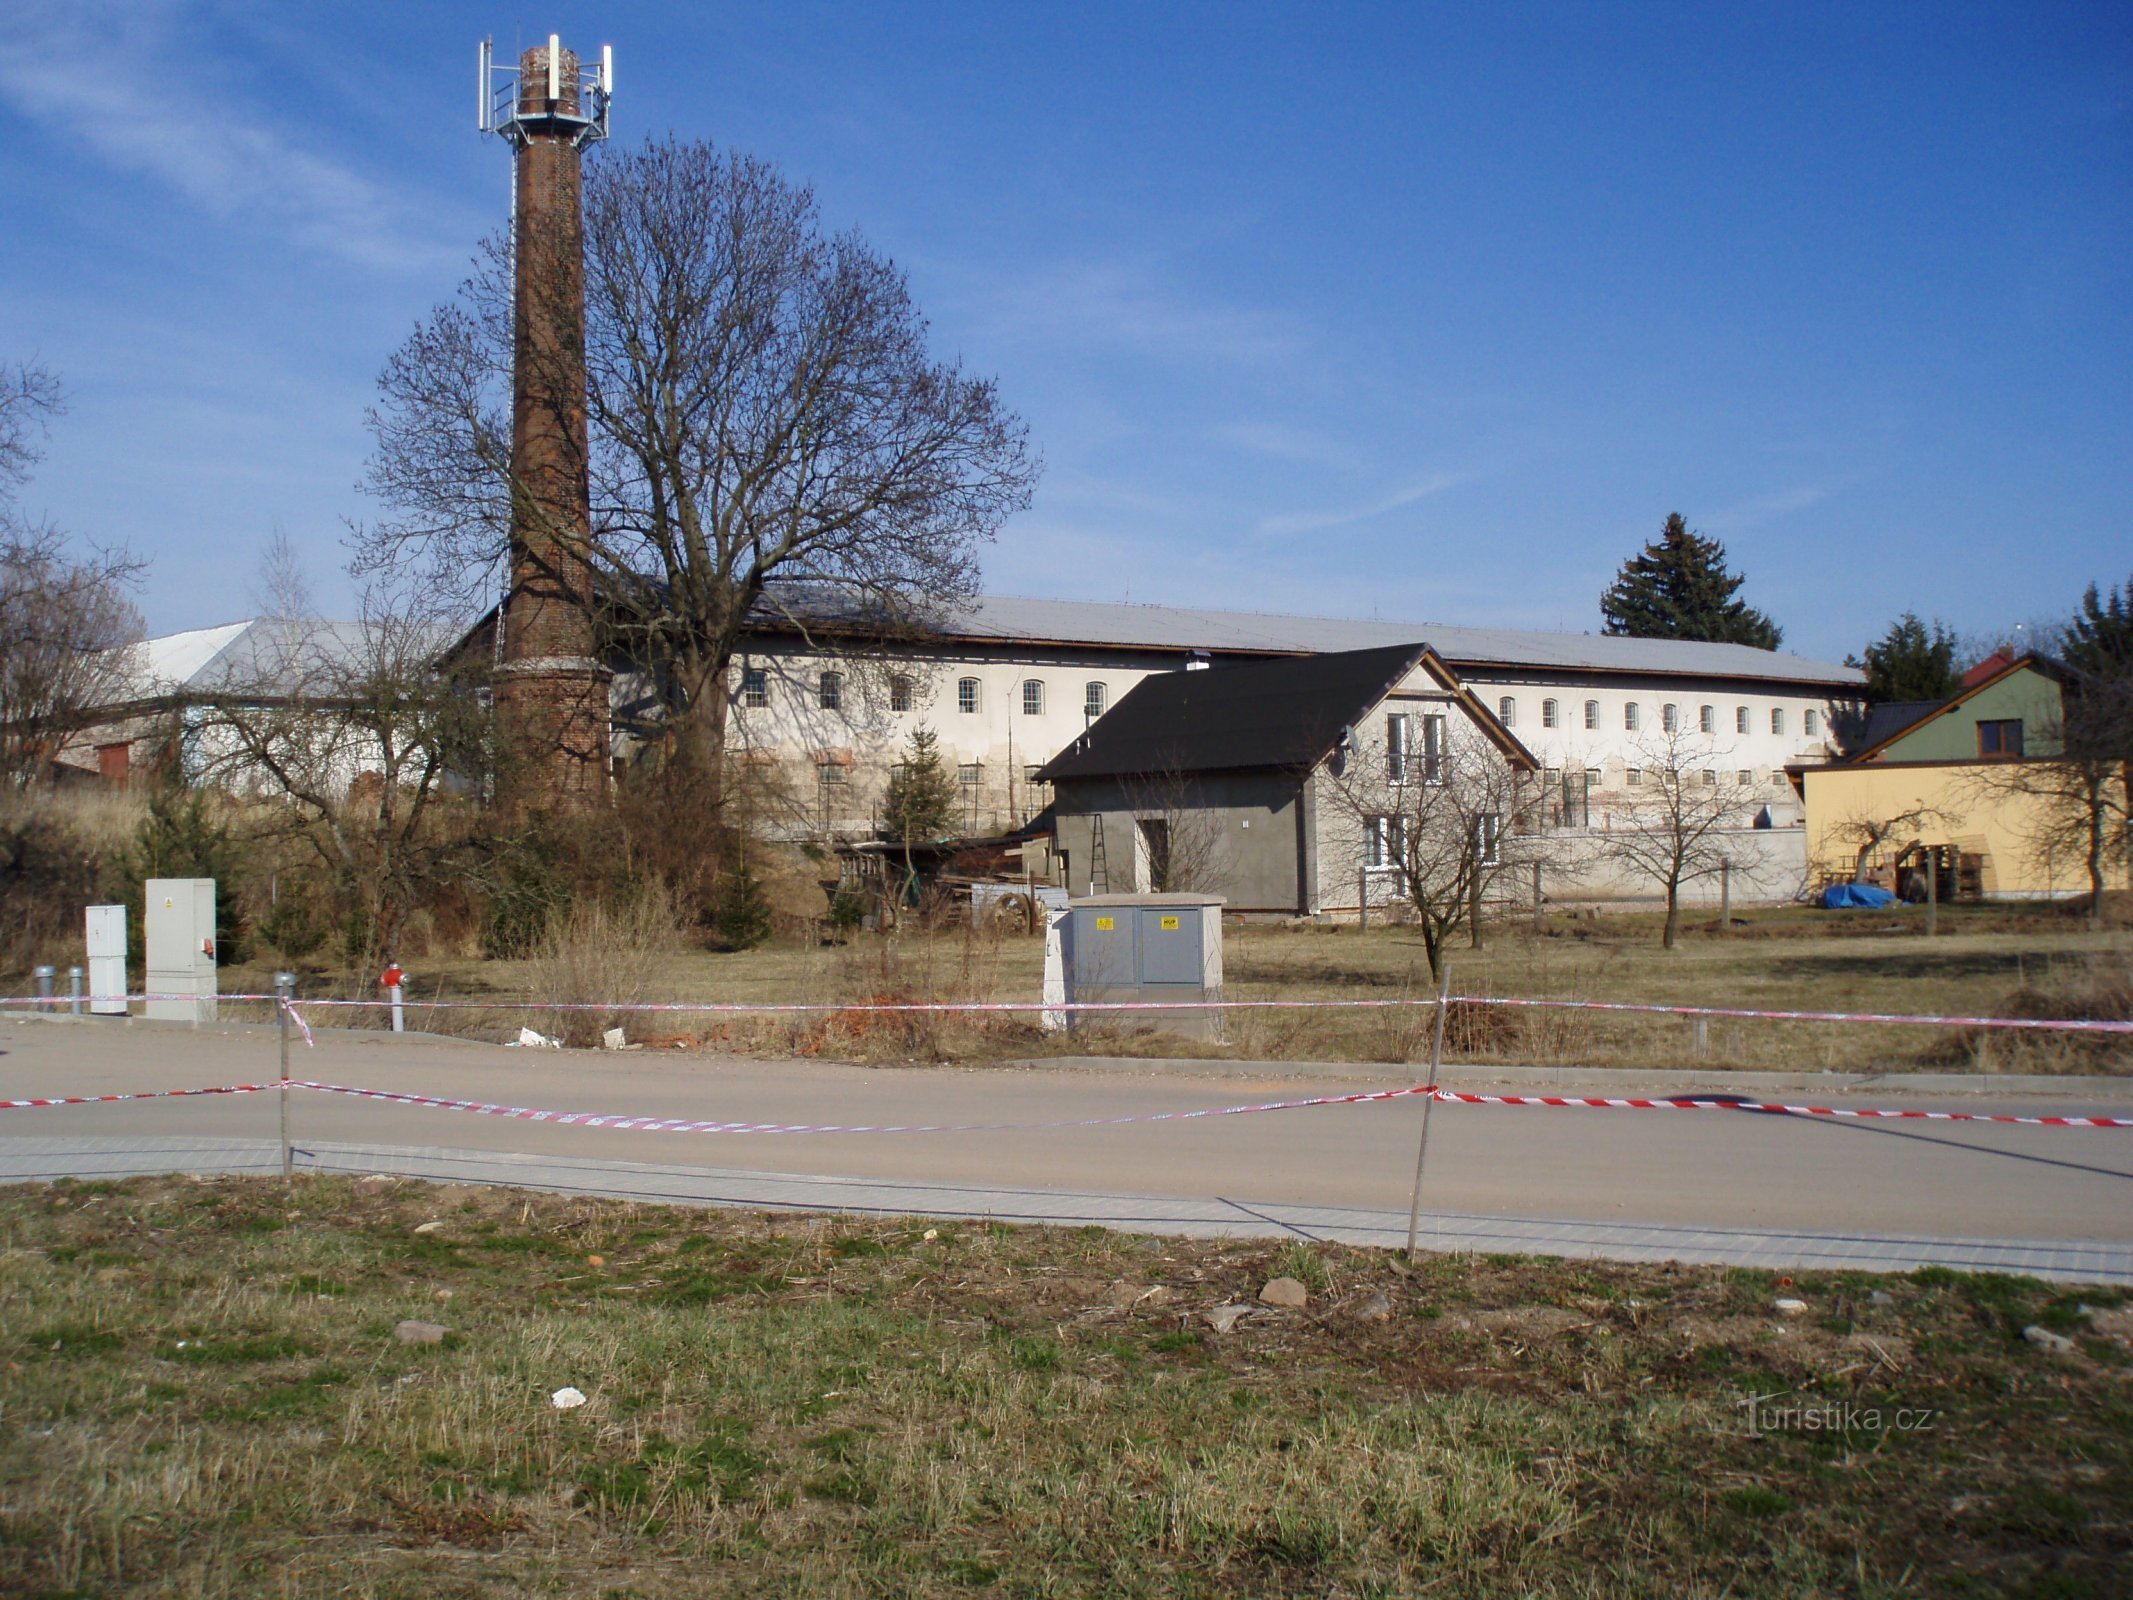 Den tidligere Komárka vingård (Hradec Králové)